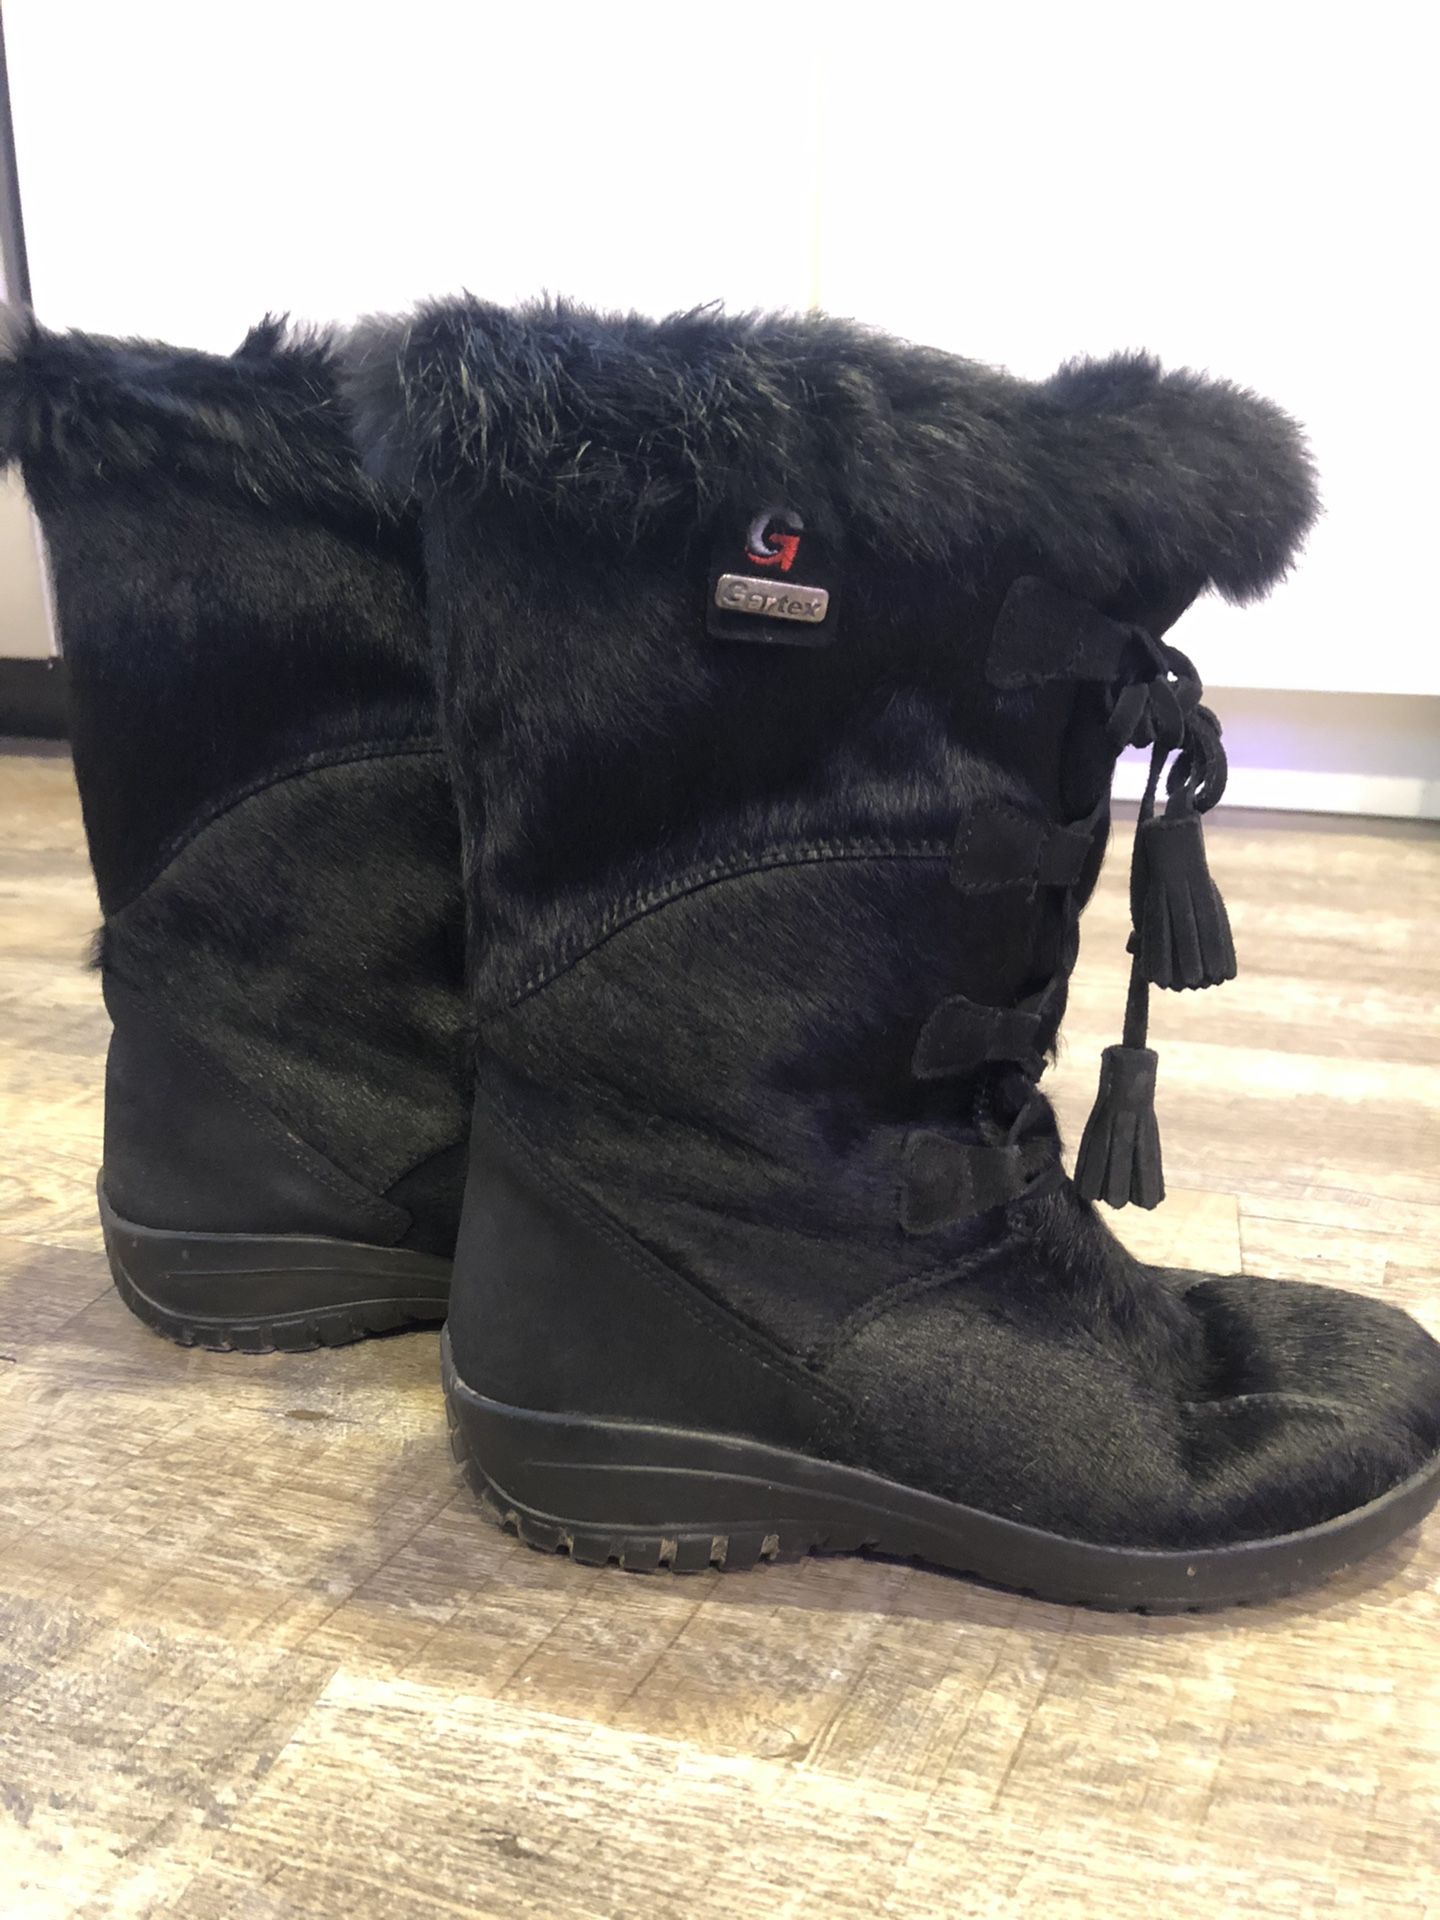 Gartex Genuine Fur Winter Boots - Women’s, Black (US 8.5, EU 39)